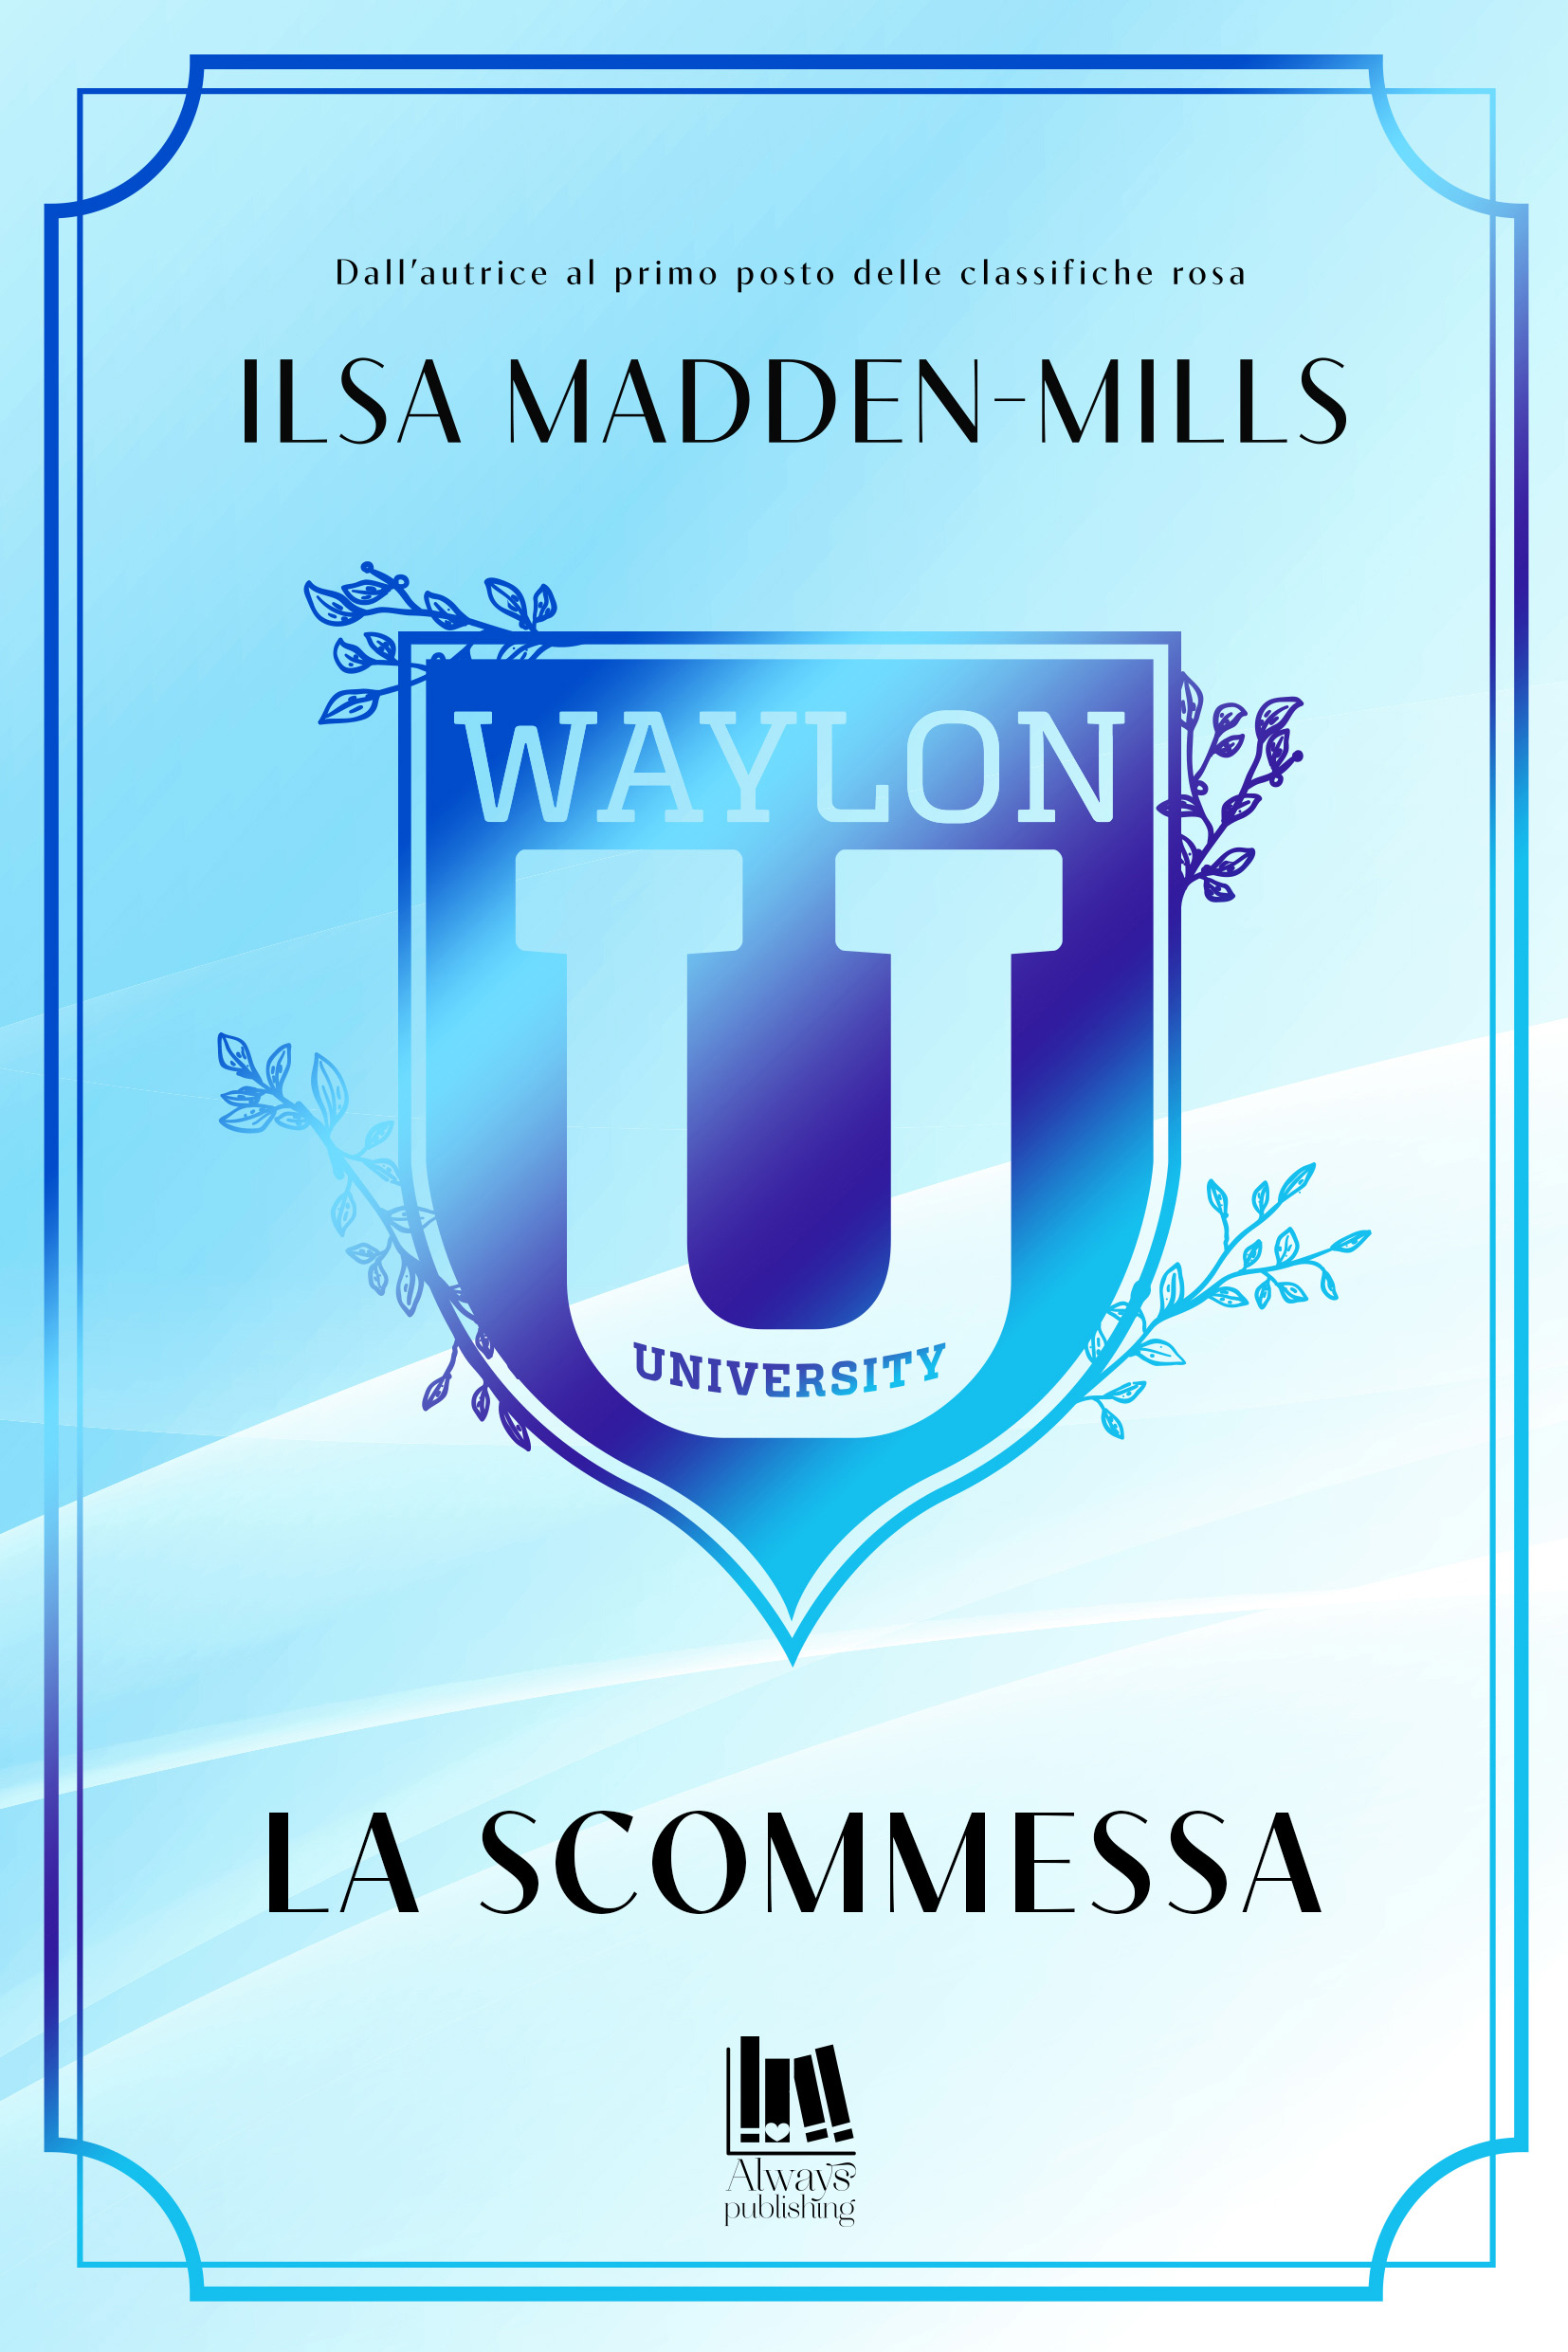 Waylon University. La scommessa